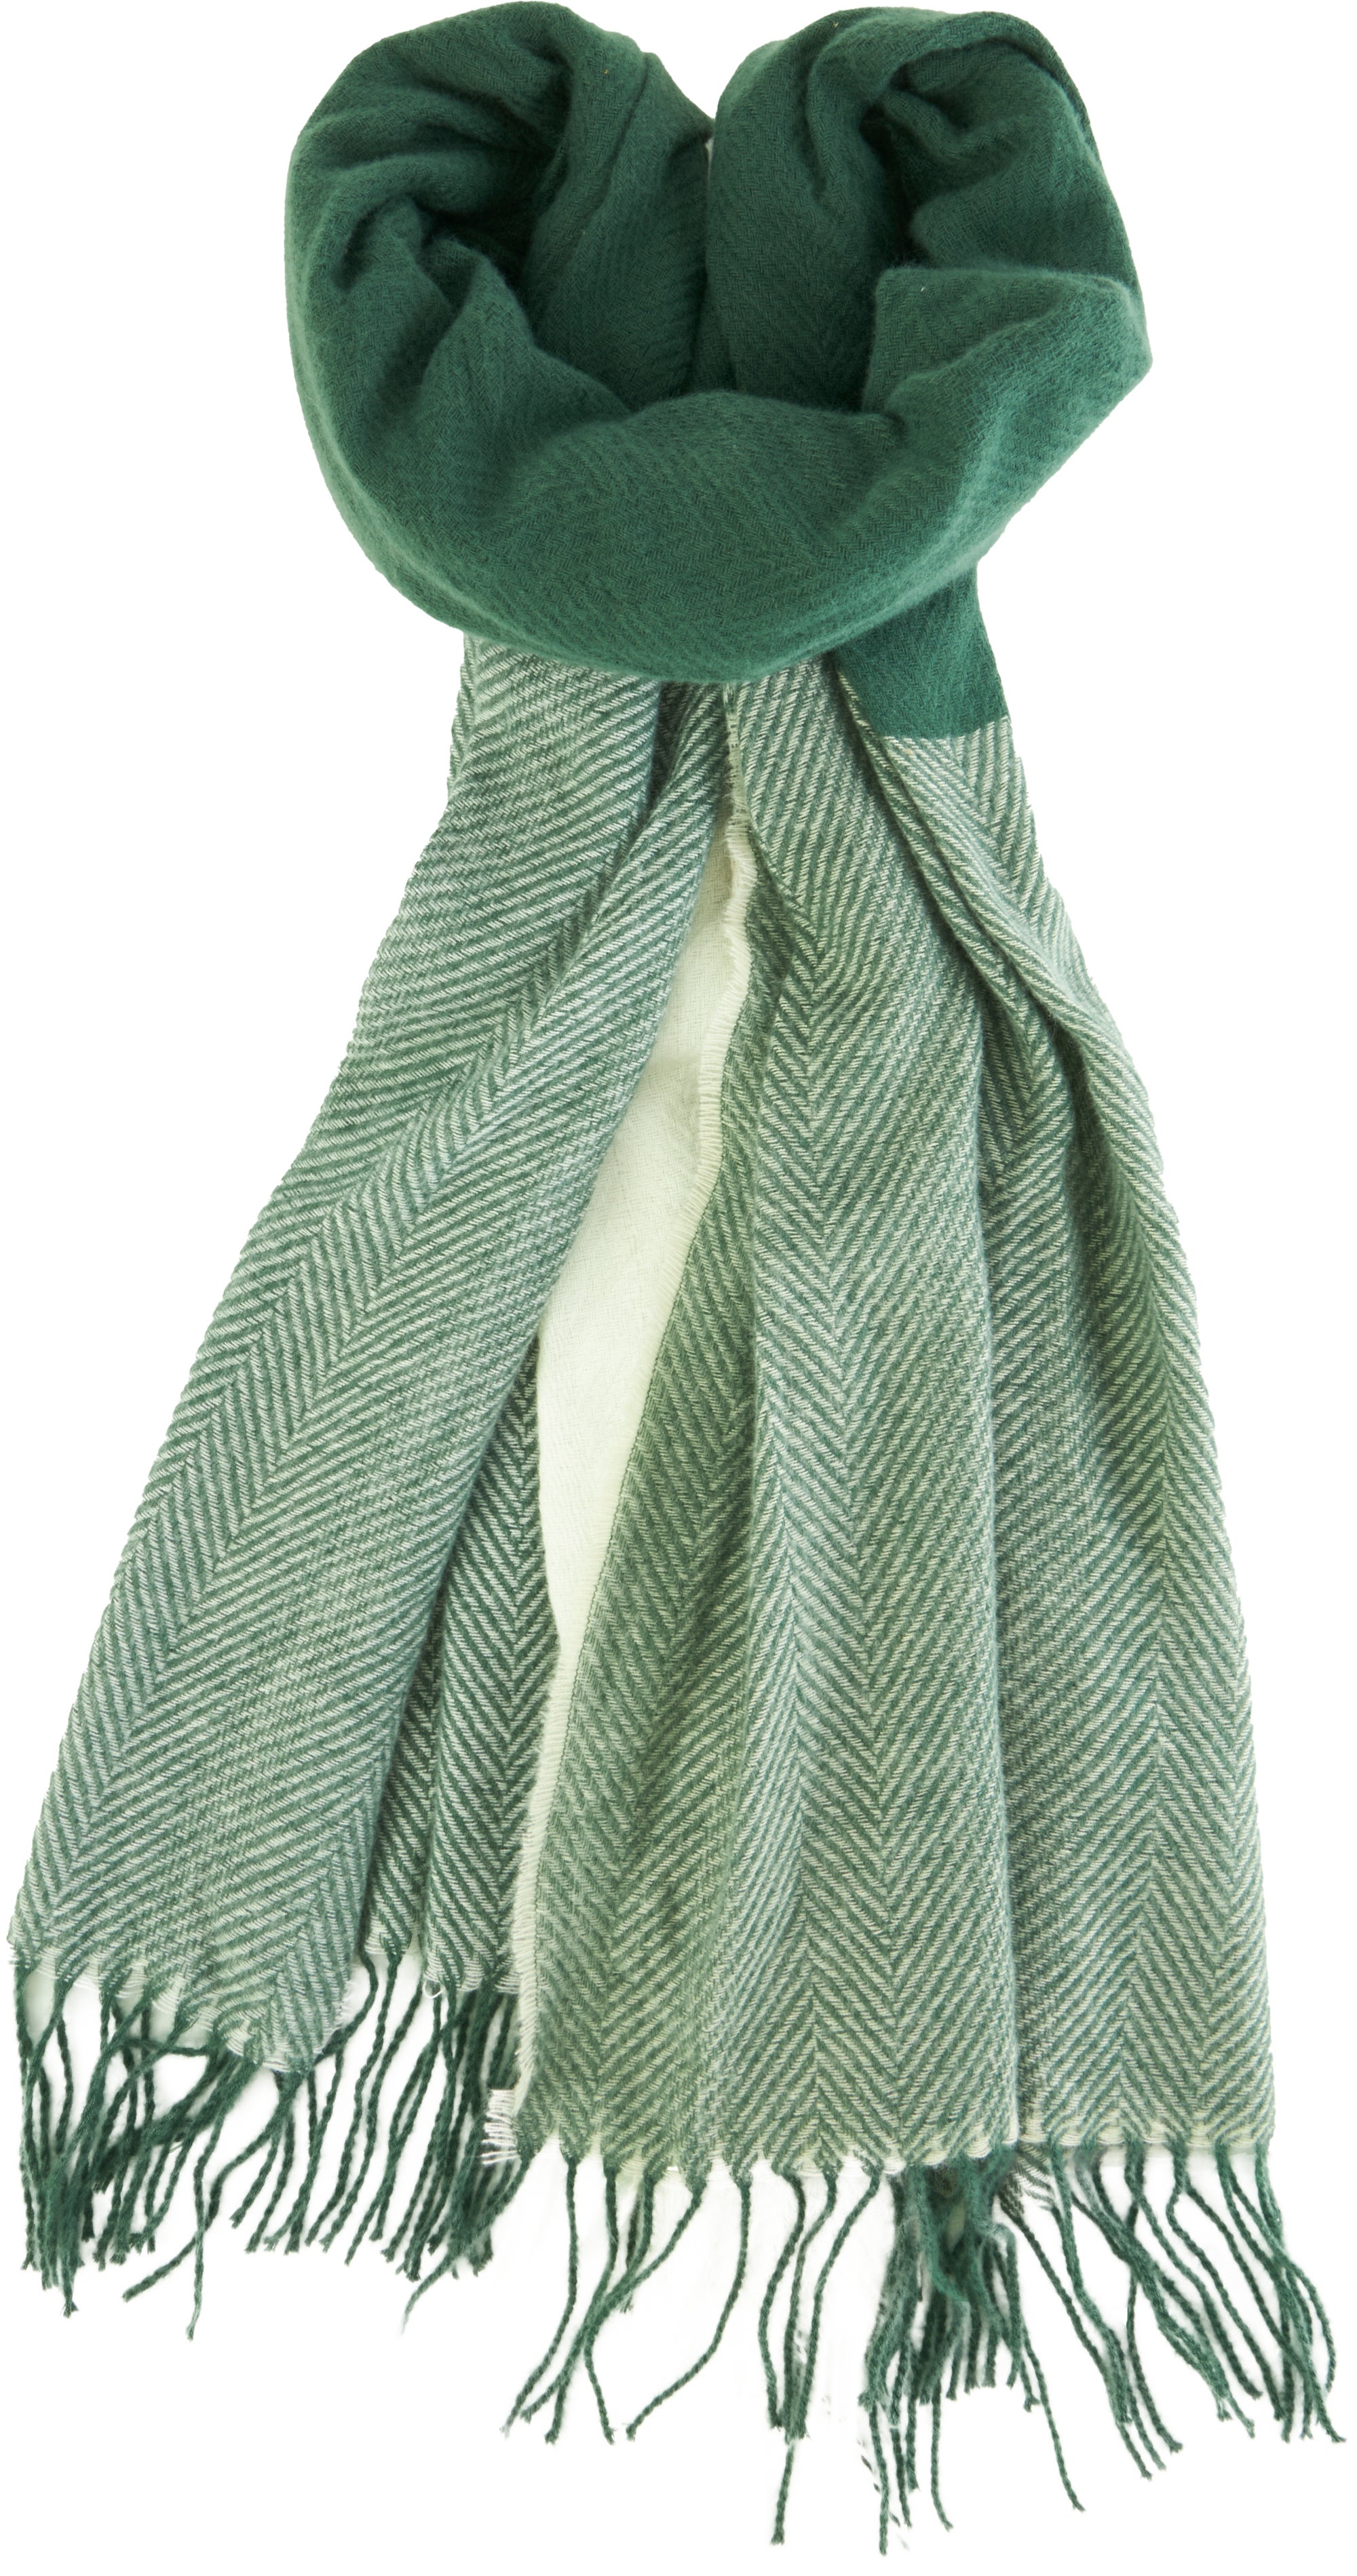 Blanket Scarf in Green/off White | Postie